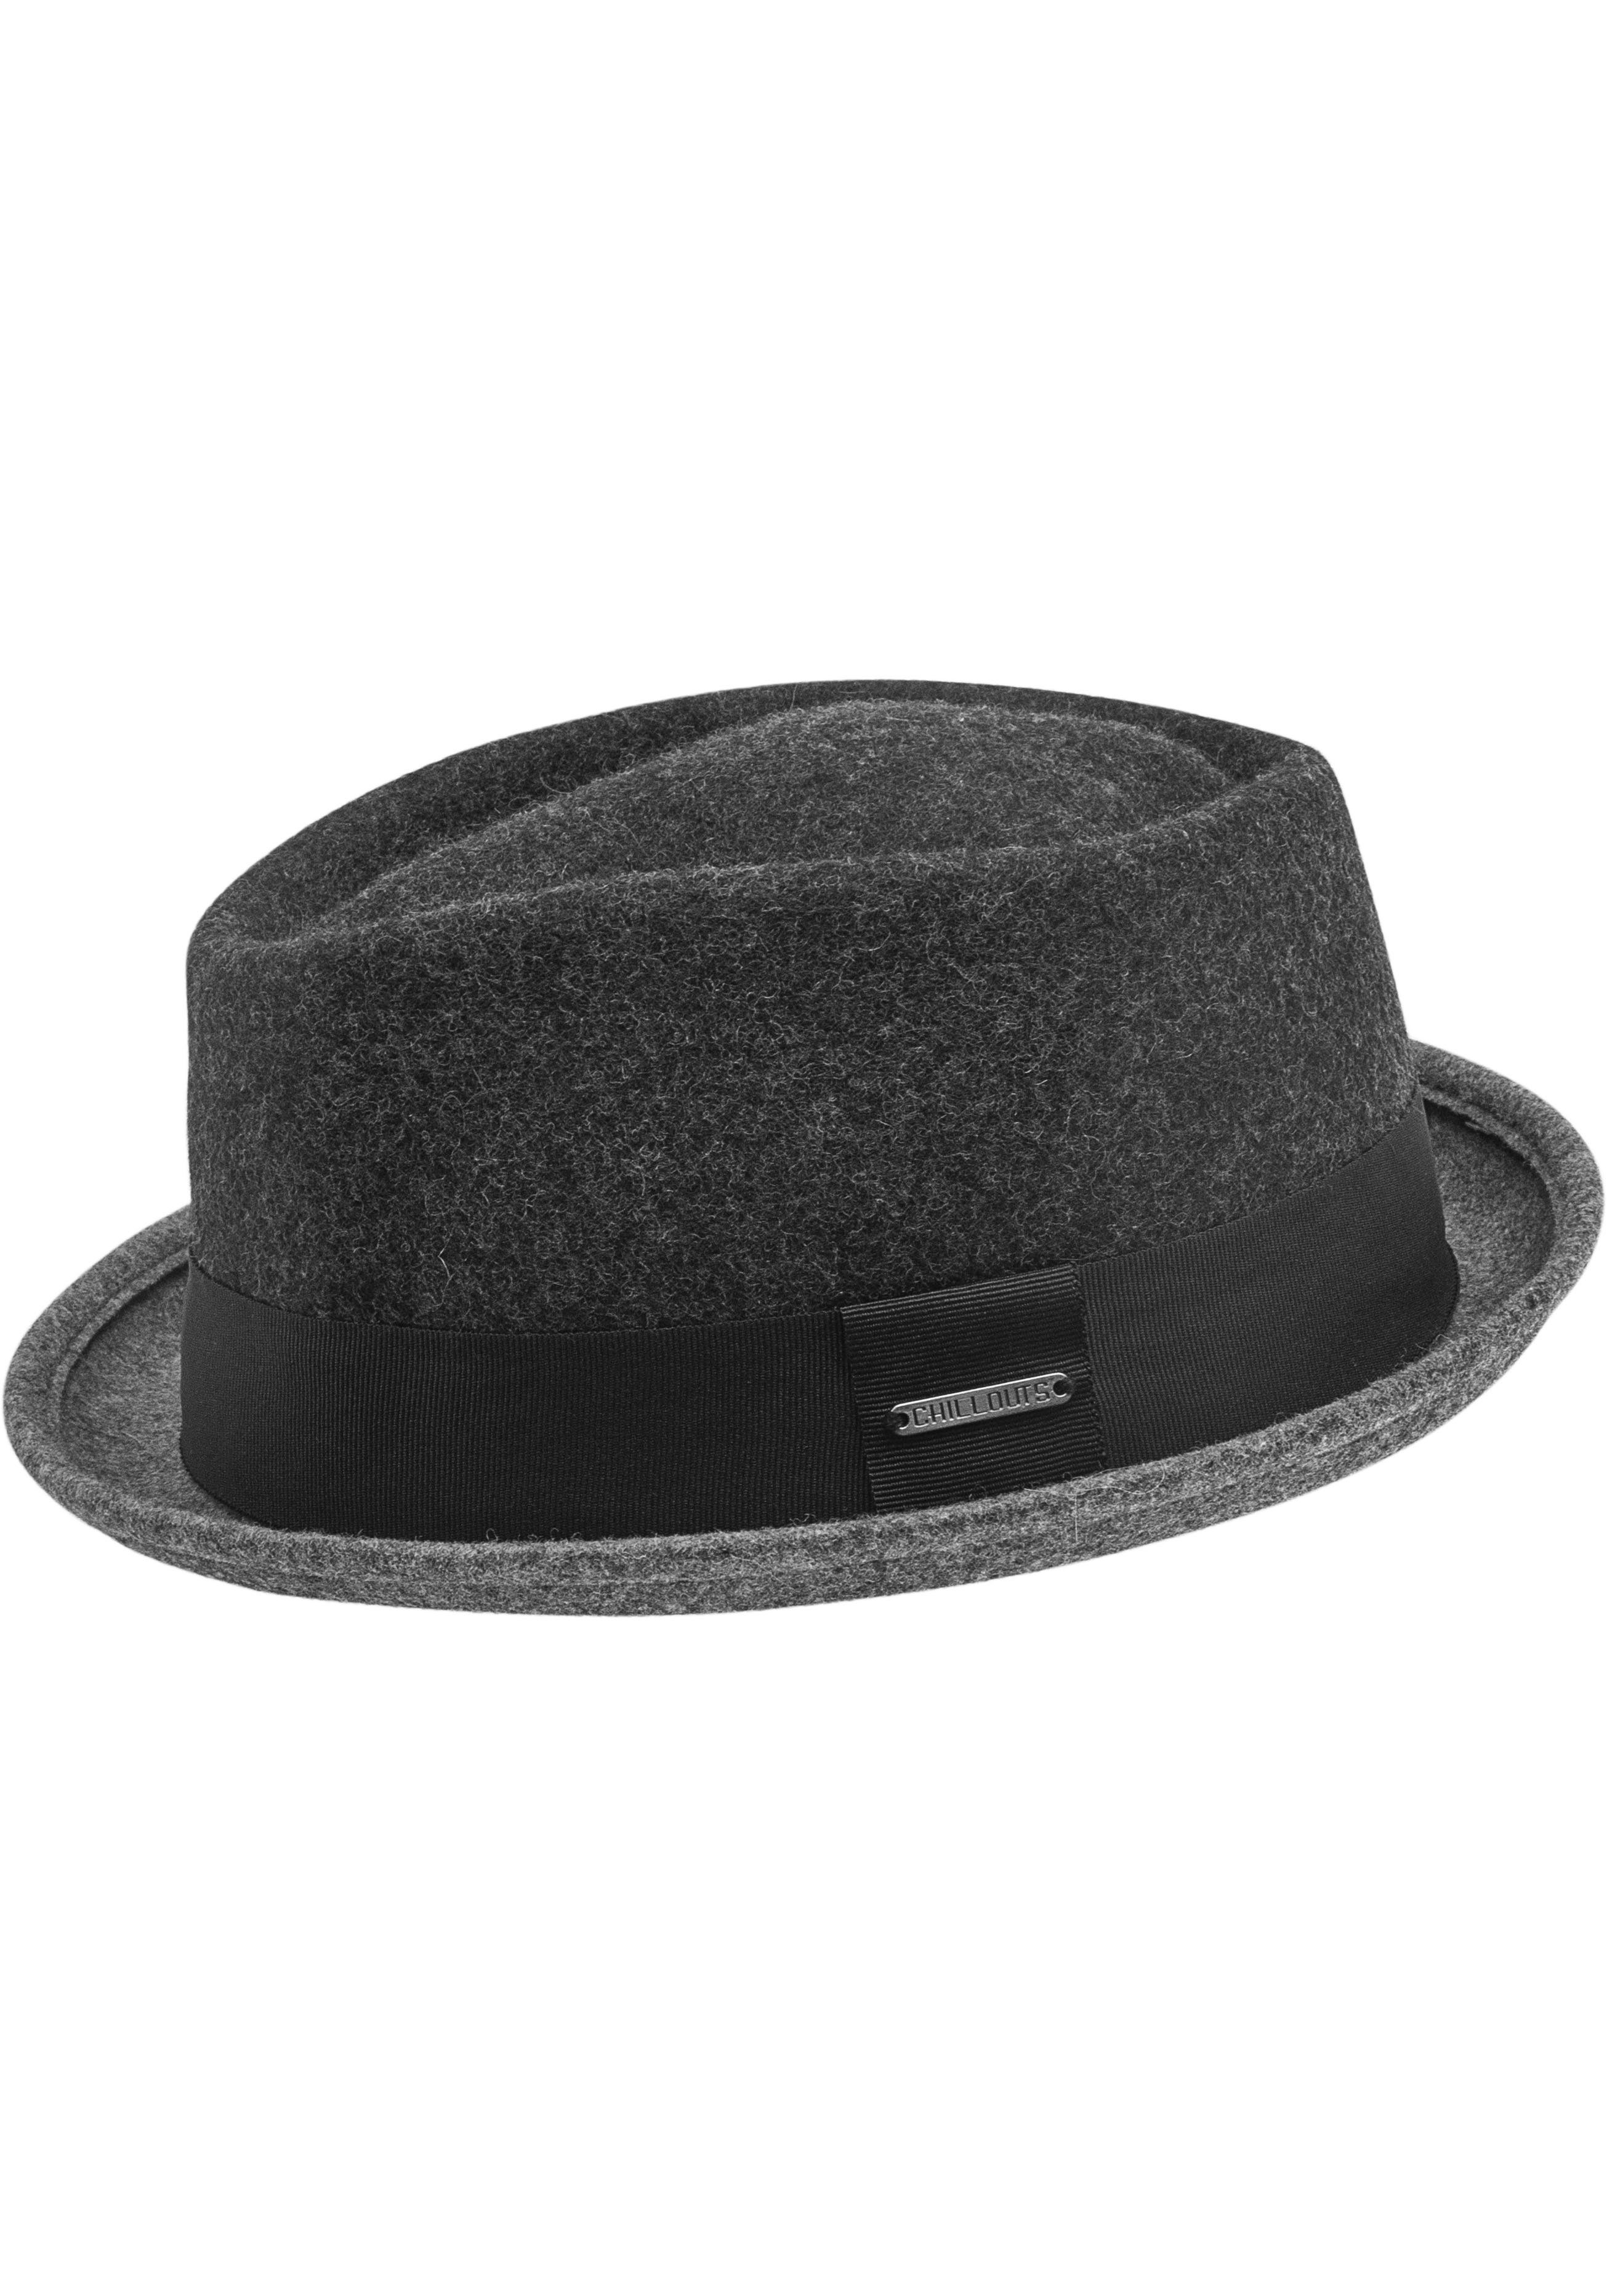 grey Filzhut Neal Hat chillouts dark